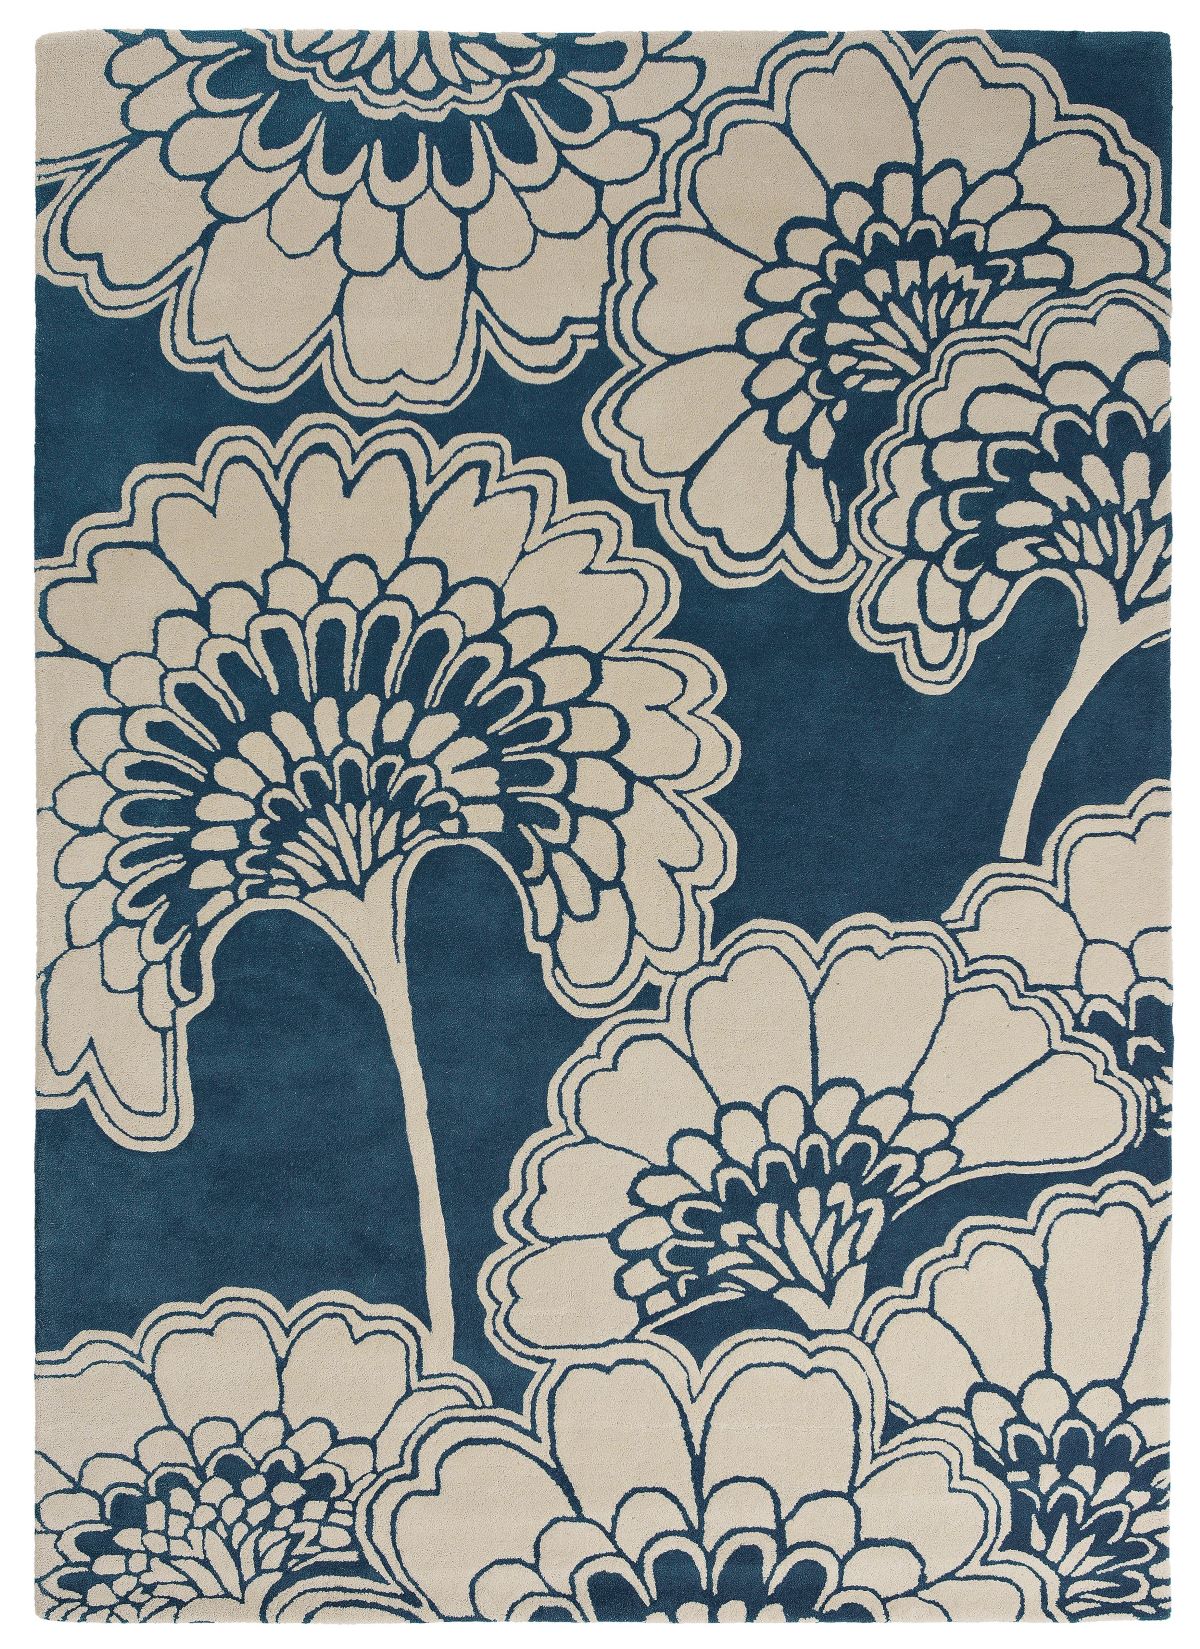 florence-broadhurst-rug-japanese-floral-midnight-039708